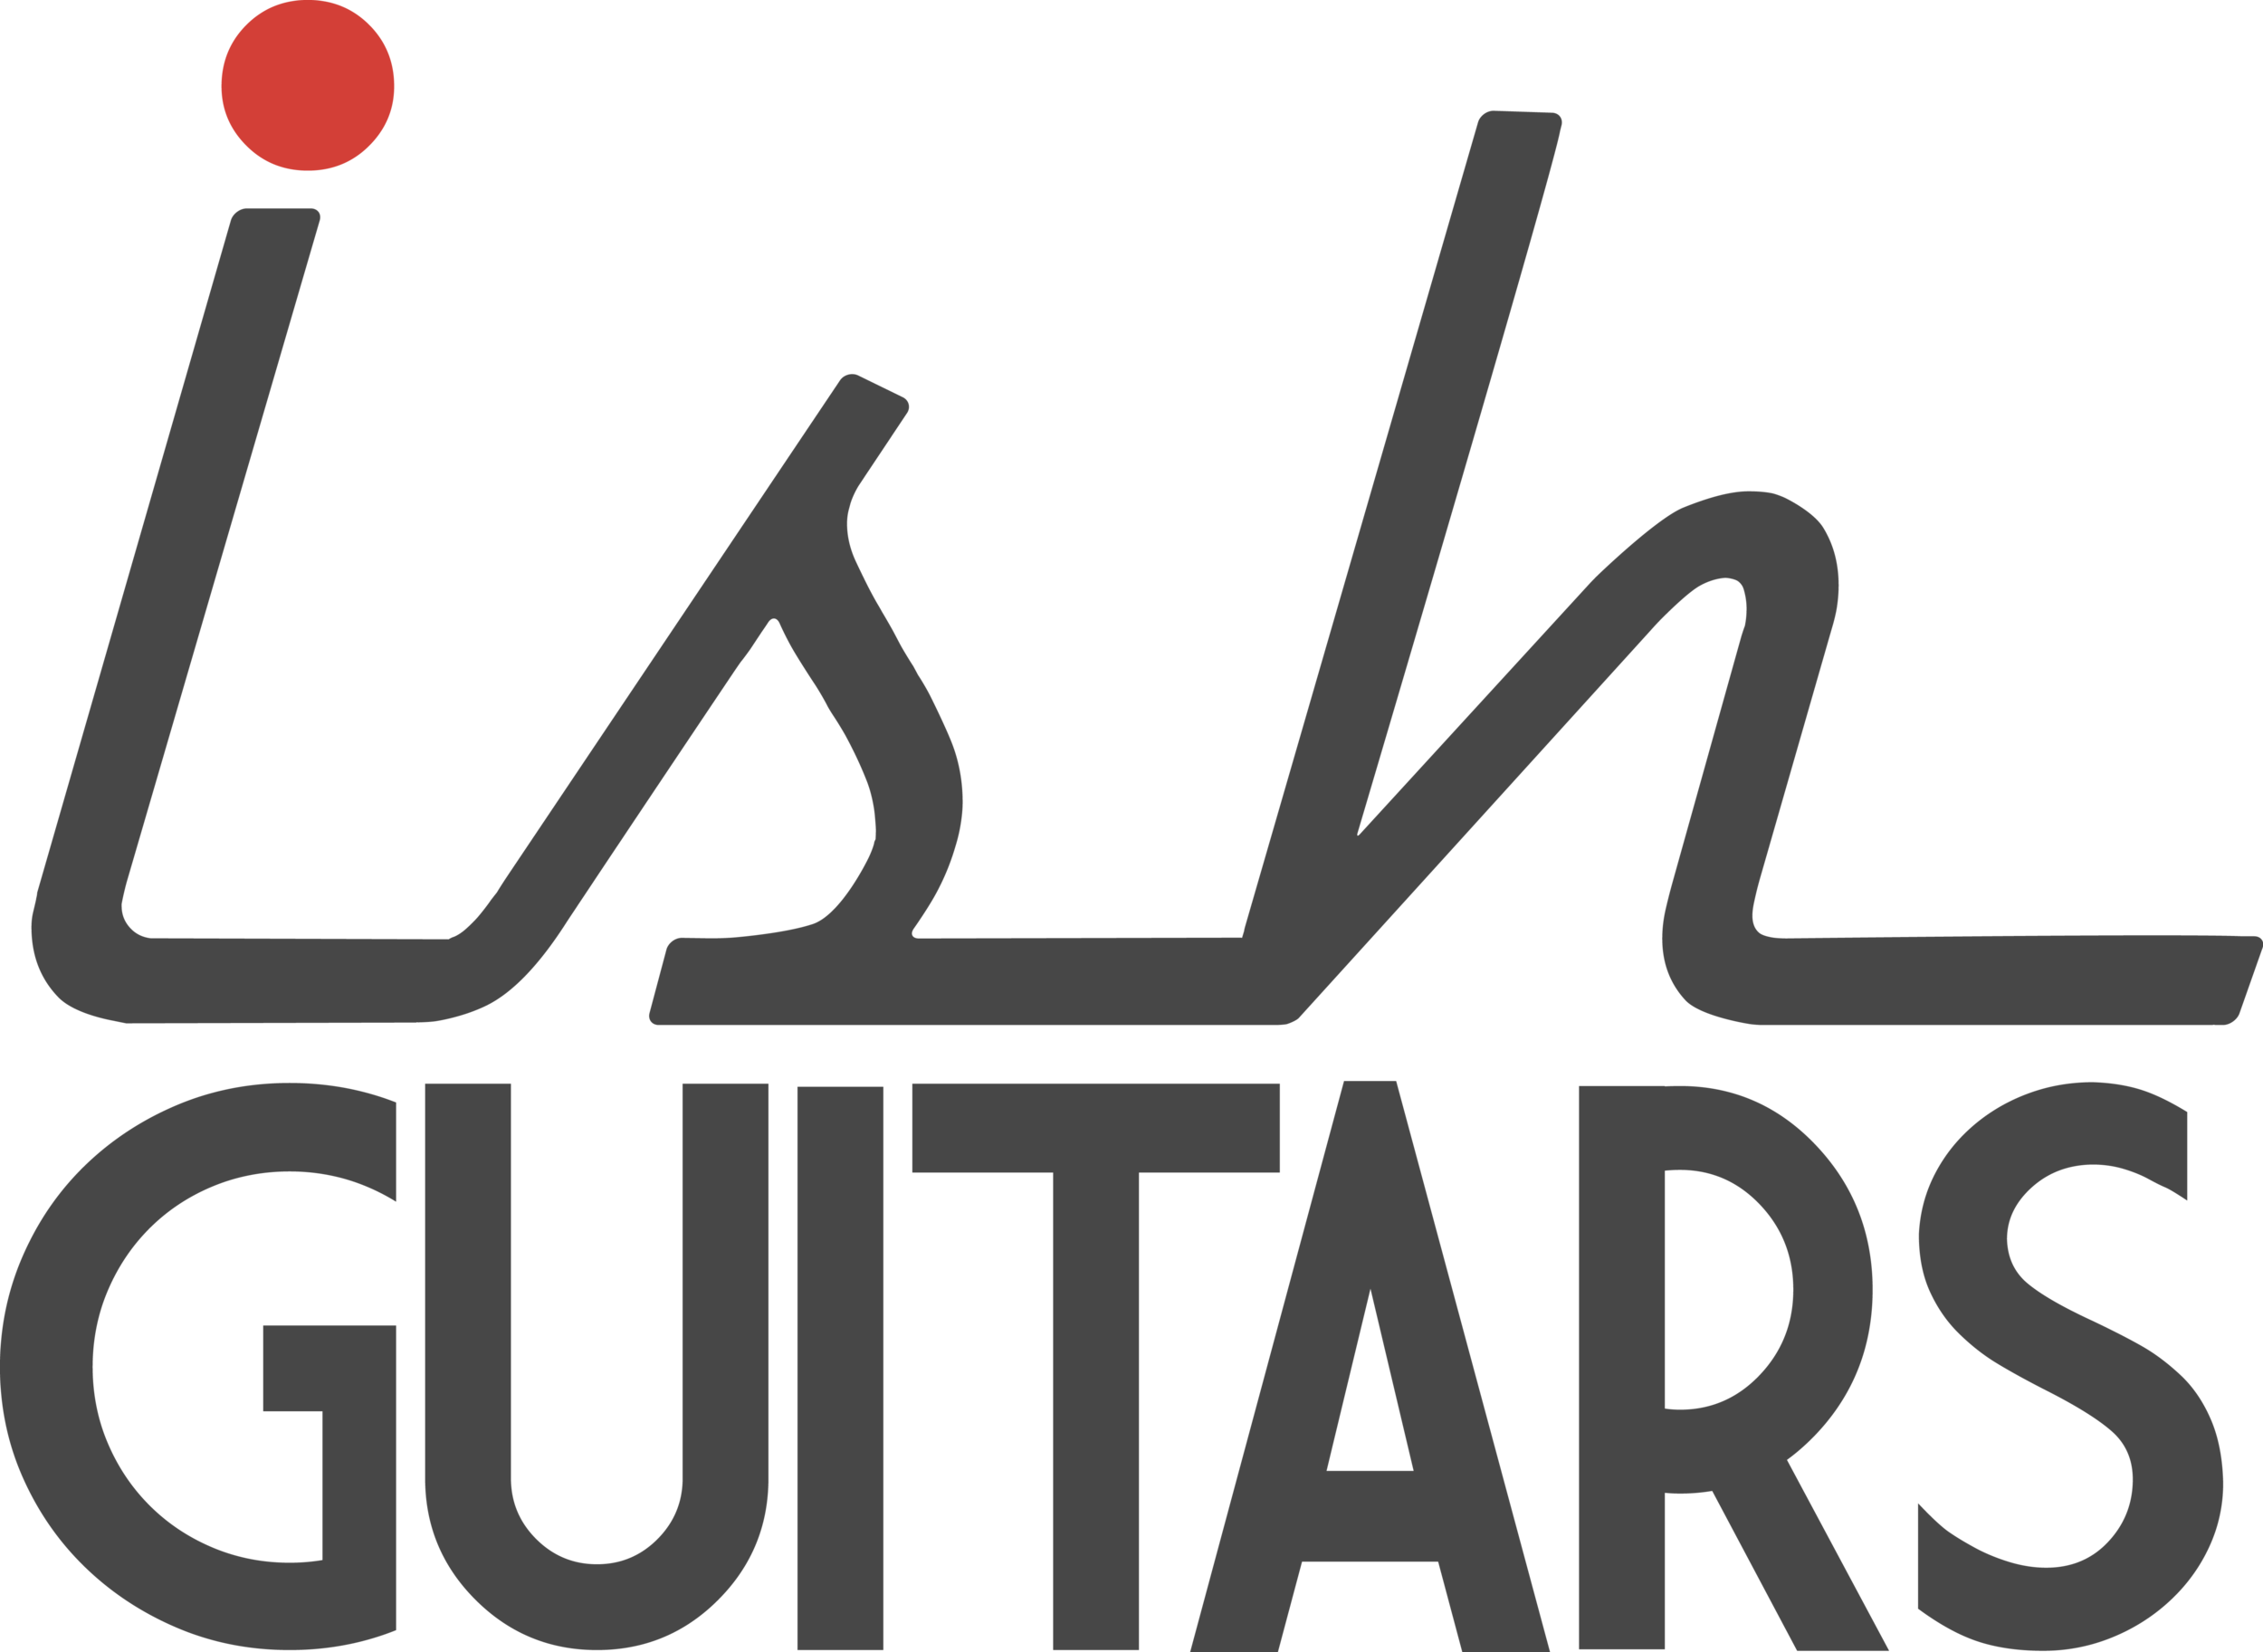 ish guitars sqaure logo large.png